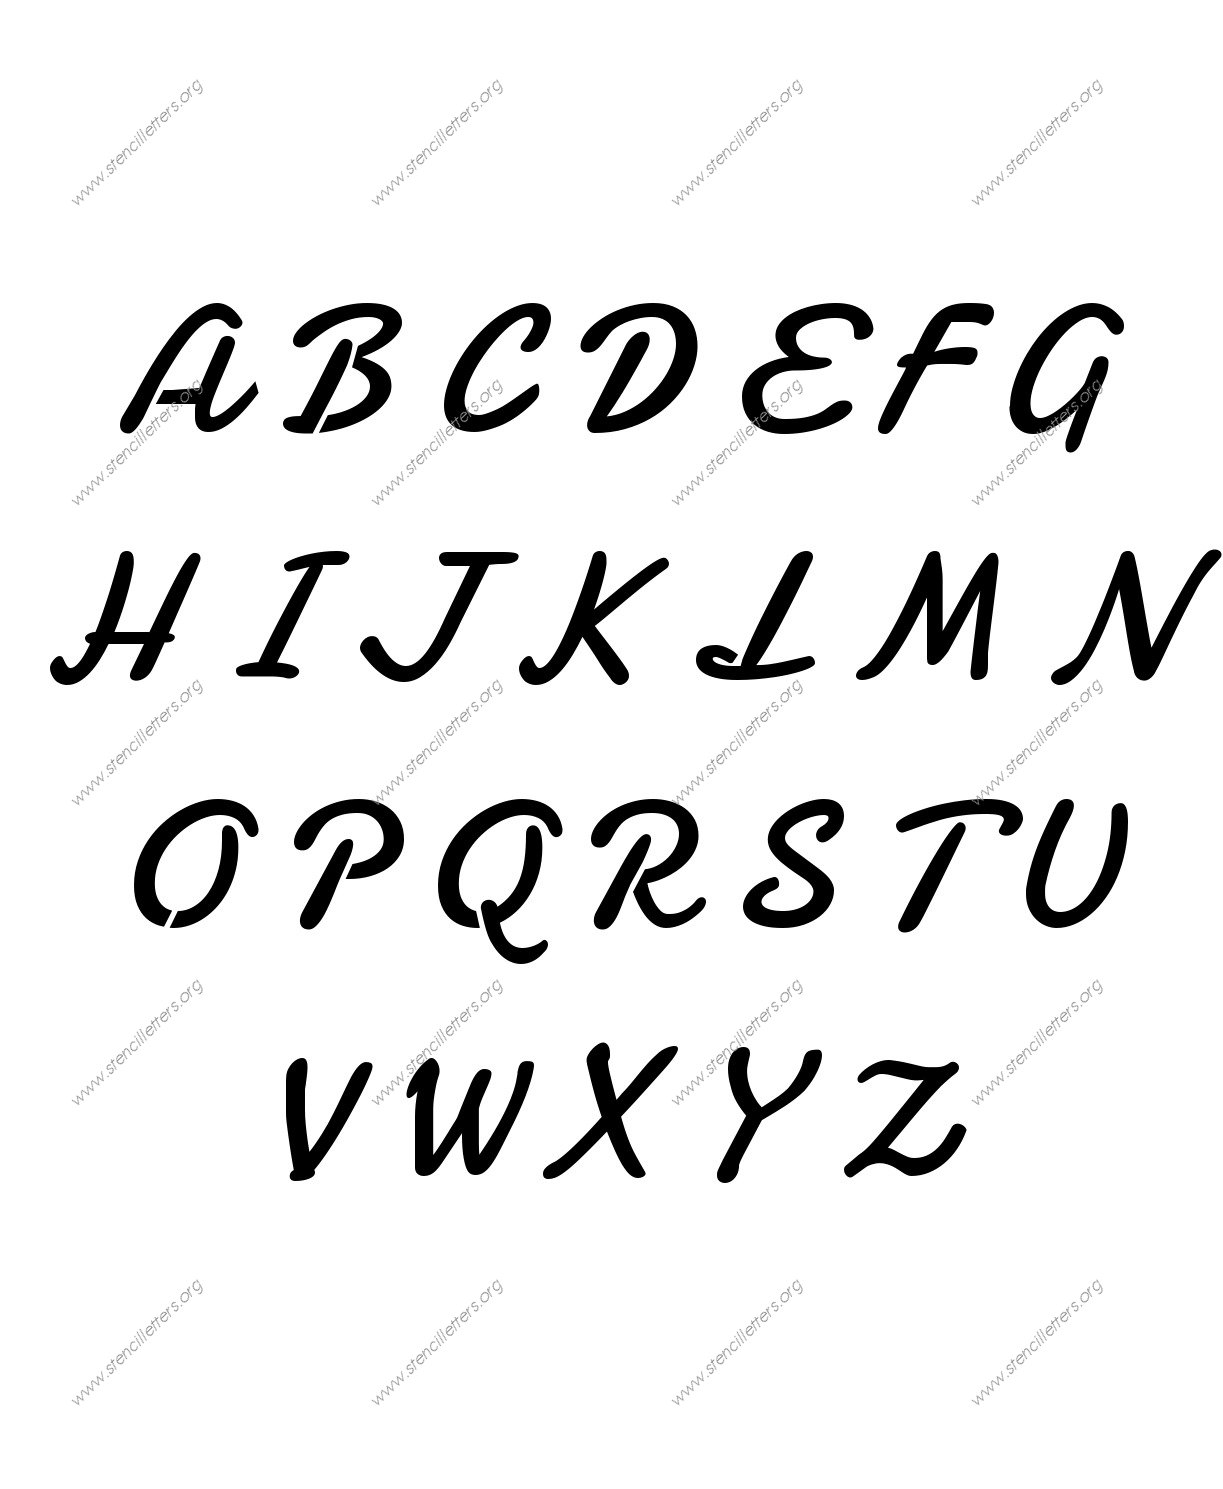 Display Script Cursive A to Z uppercase letter stencils